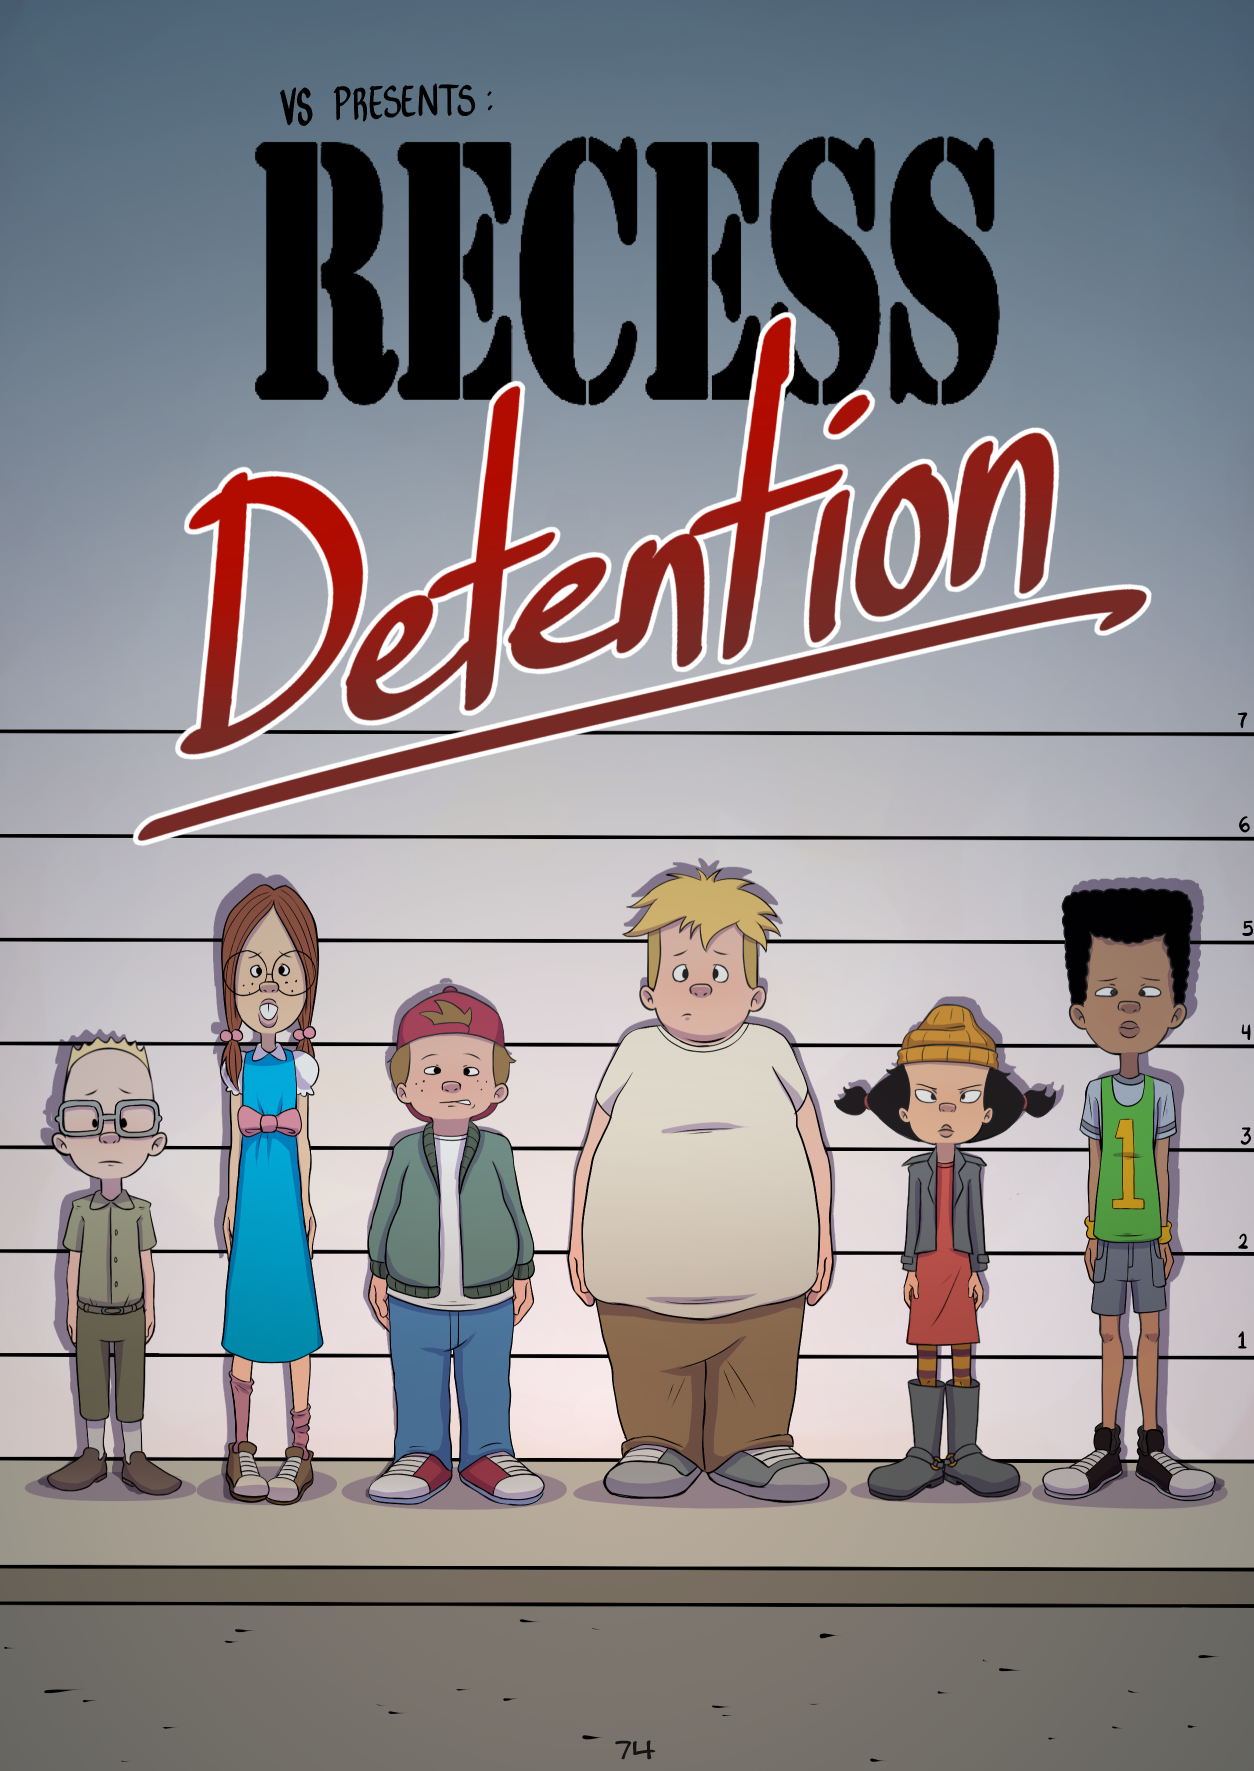 Recess – Detention